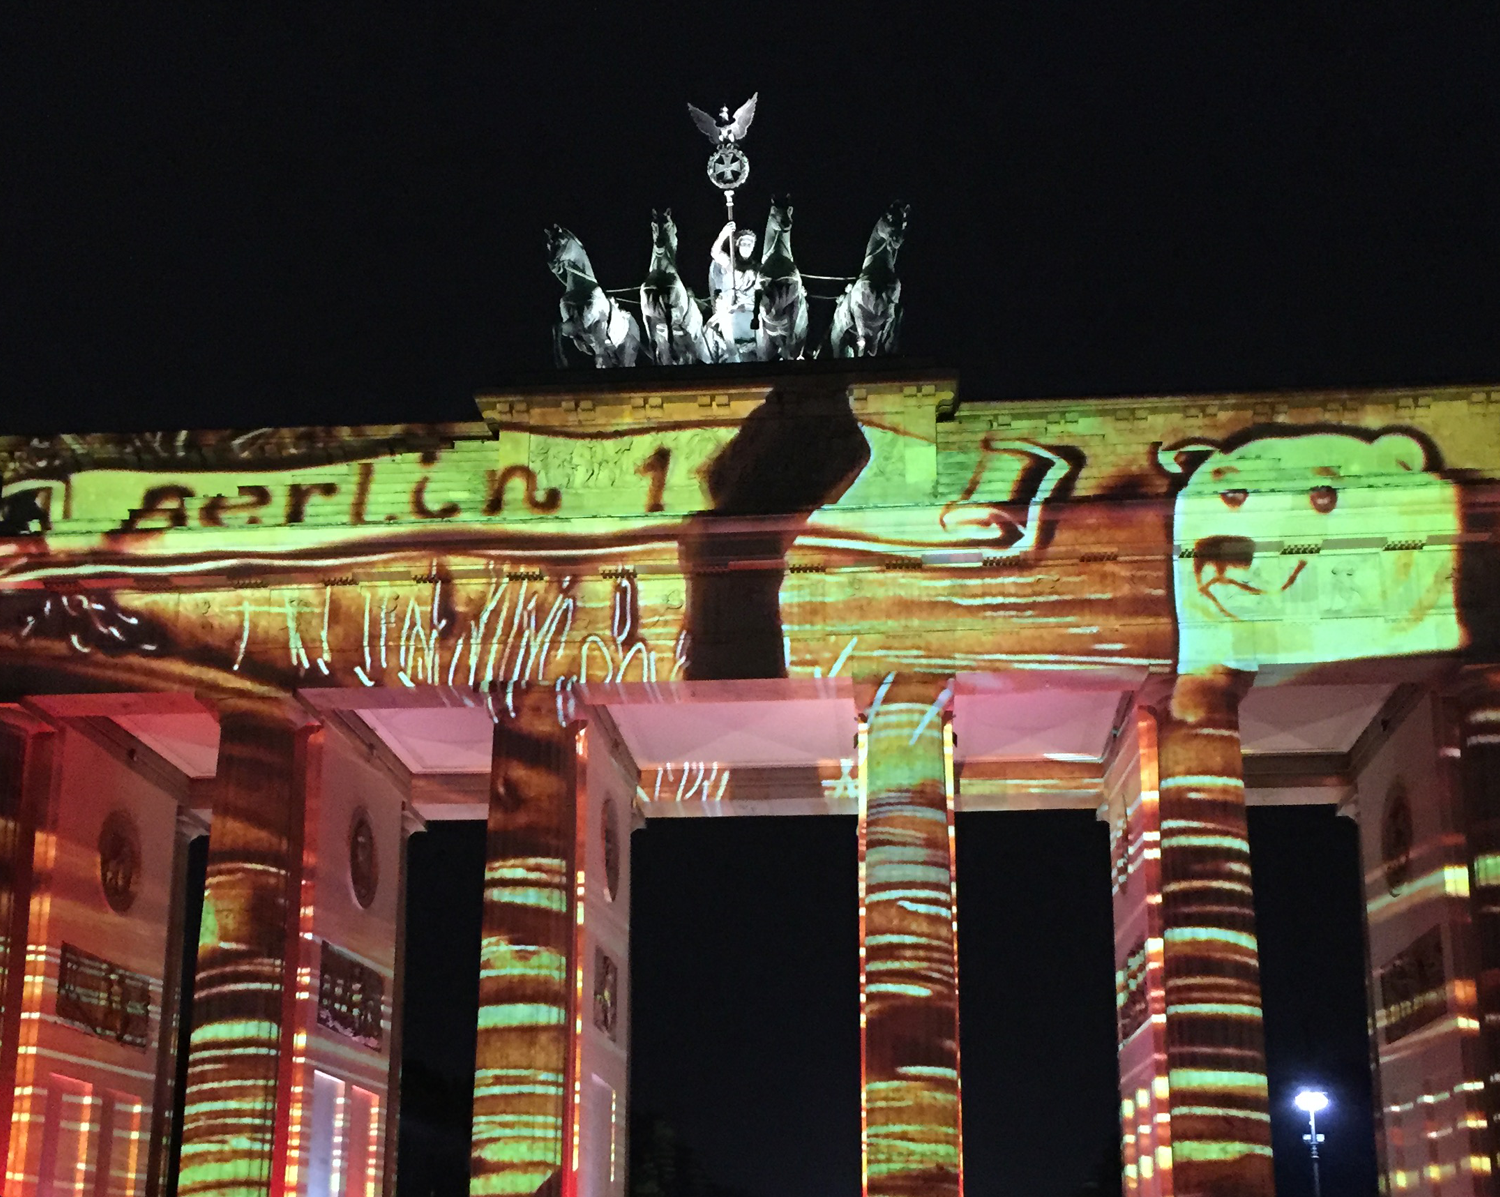 Berlin leuchtet 2016 - Aljona Voynova am Brandenburger Tor